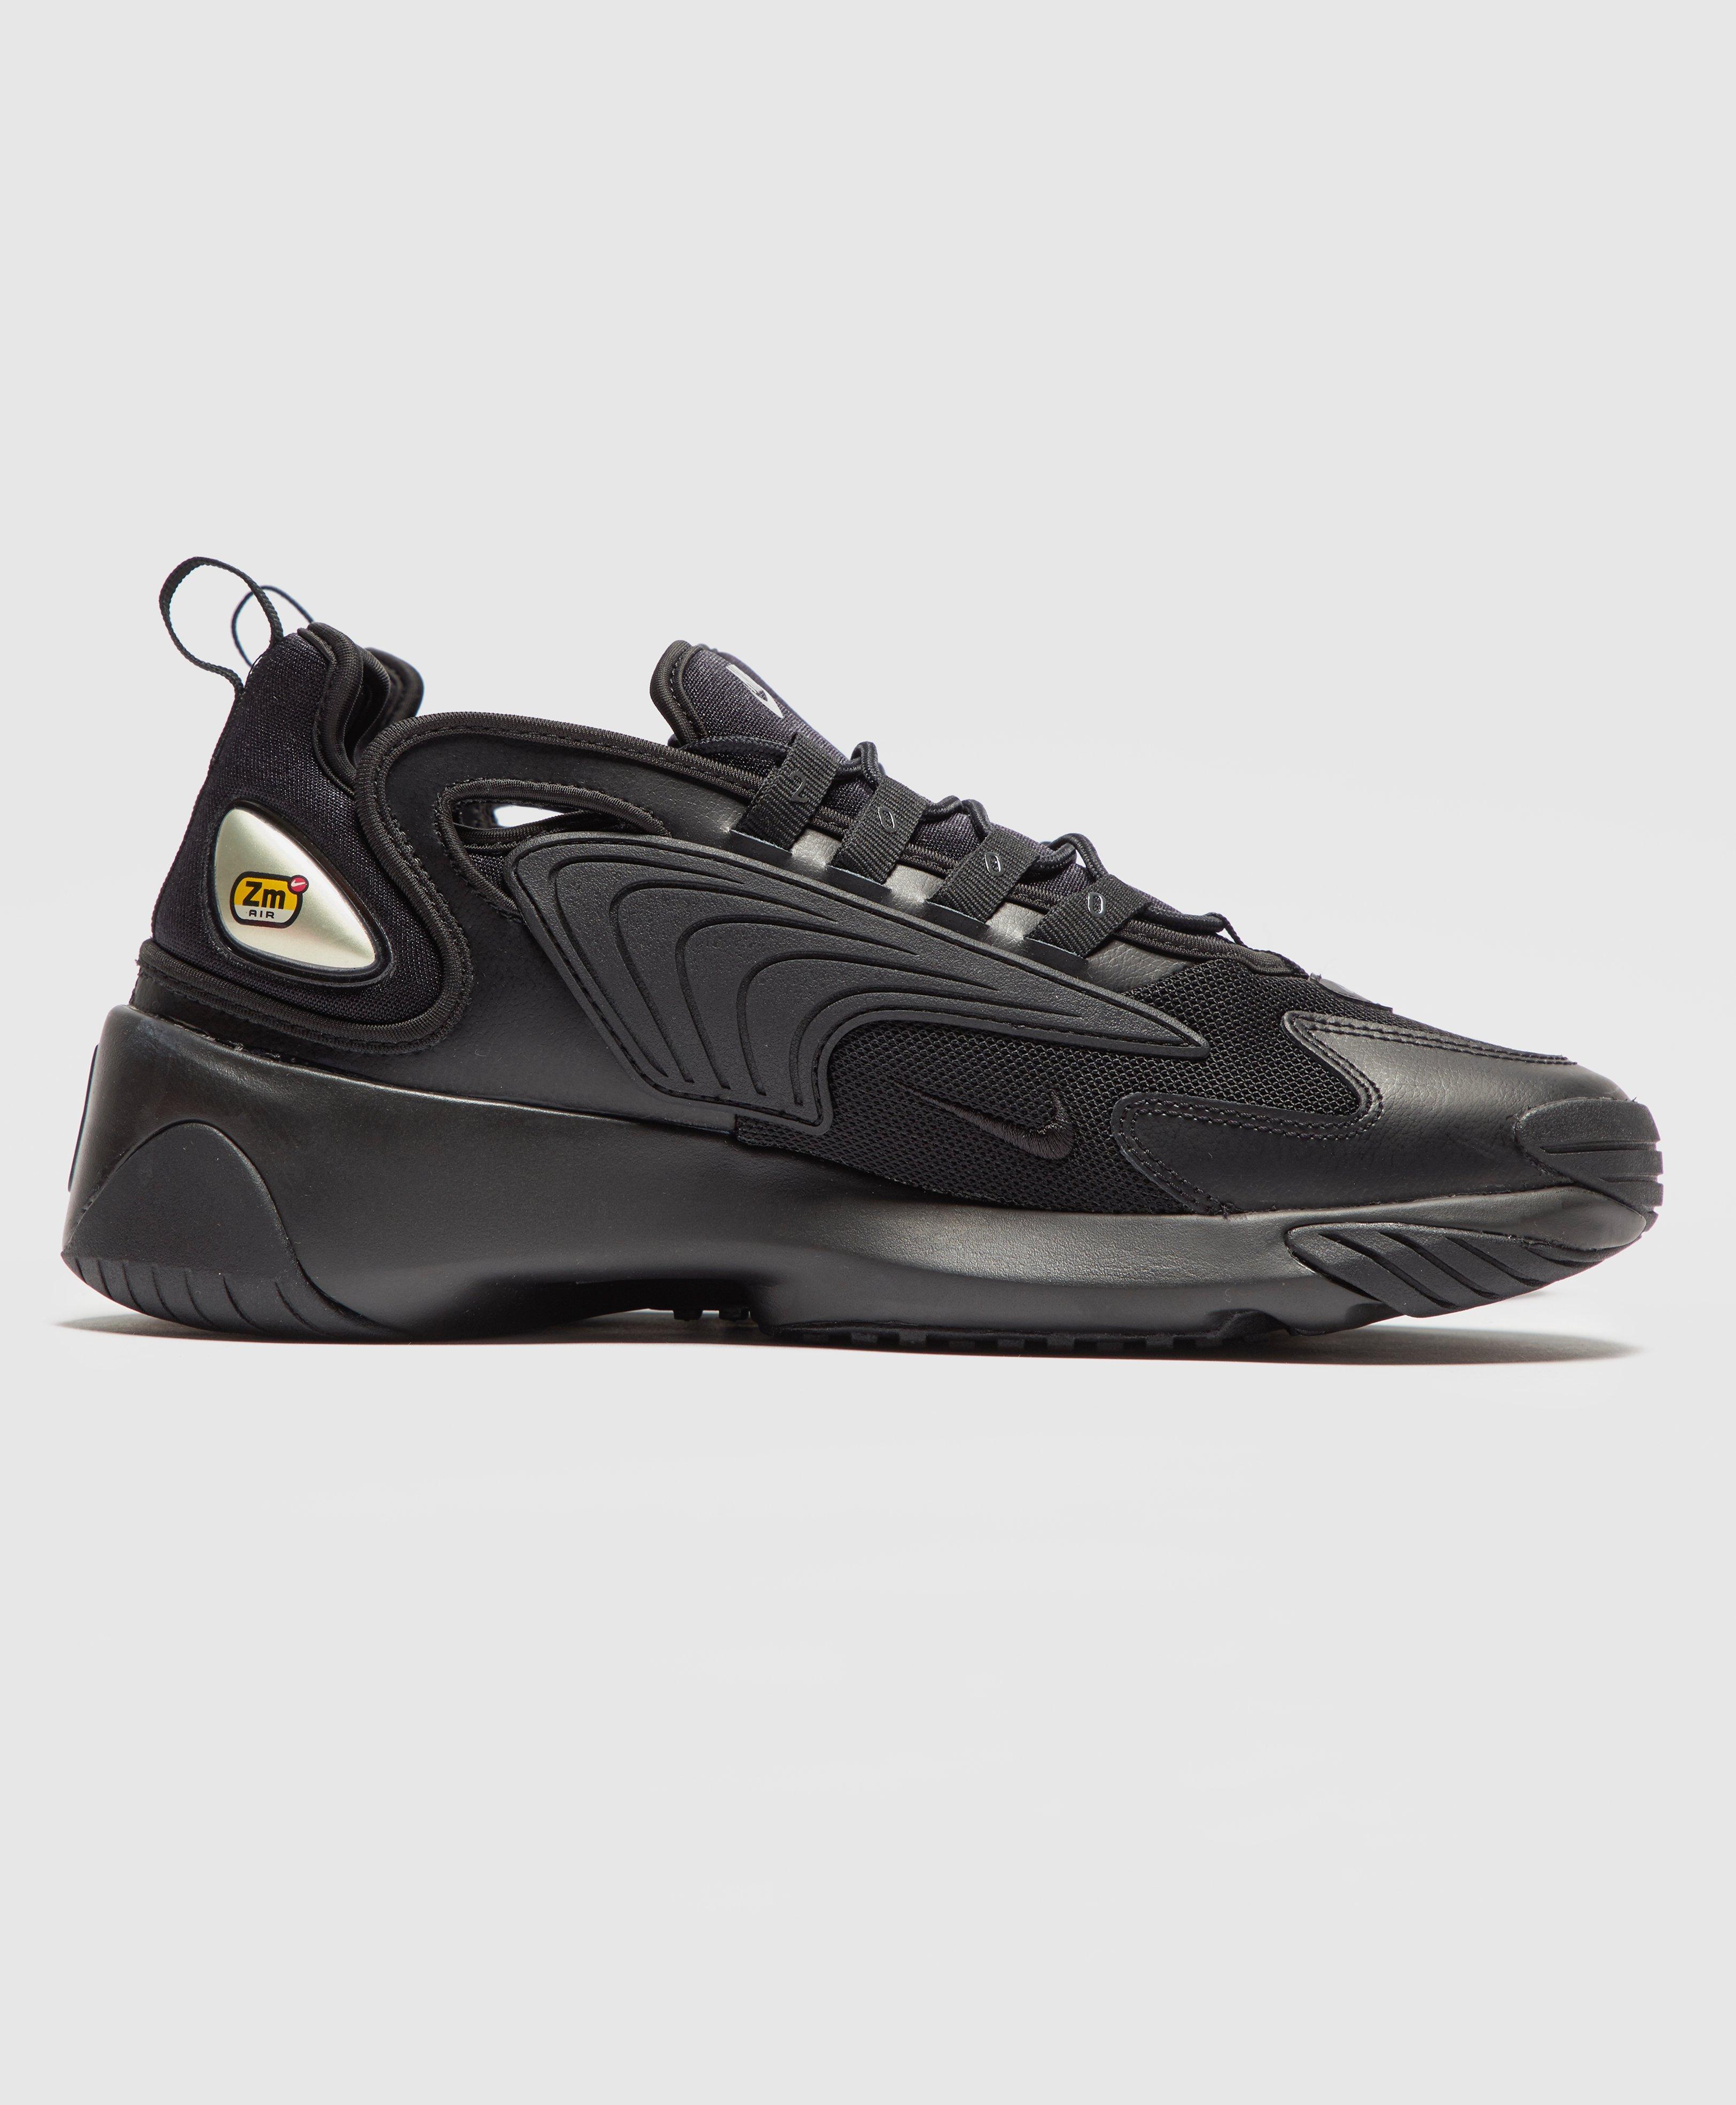 Nike Zoom 2k Shoe in Black/ Black-Anthracite (Black) for Men - Lyst